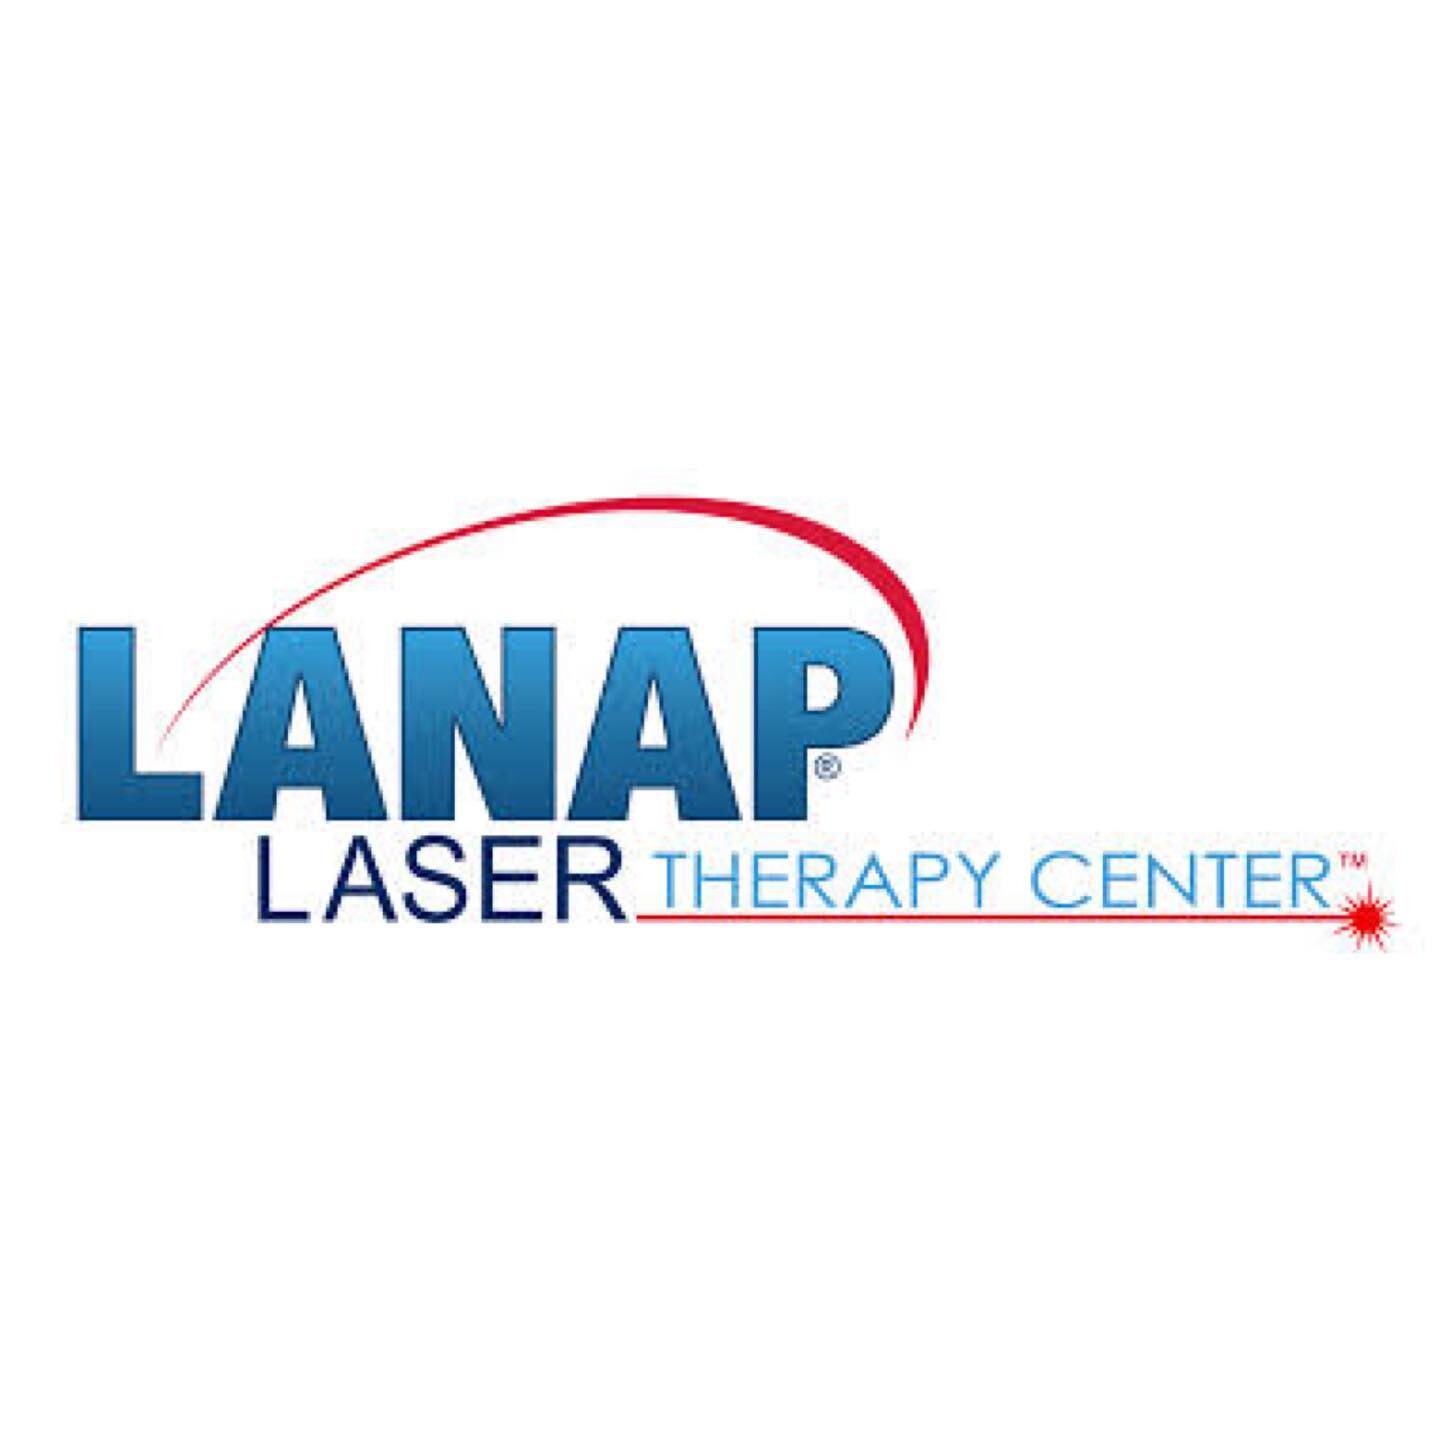 Proud to be LANAP Certified - Laser Gum Disease Treatment
🦷
#lanap #dentist #nj #njdentist #newark #lasertreatment #gumdisease #periodontaldisease #dentalcare #tgif